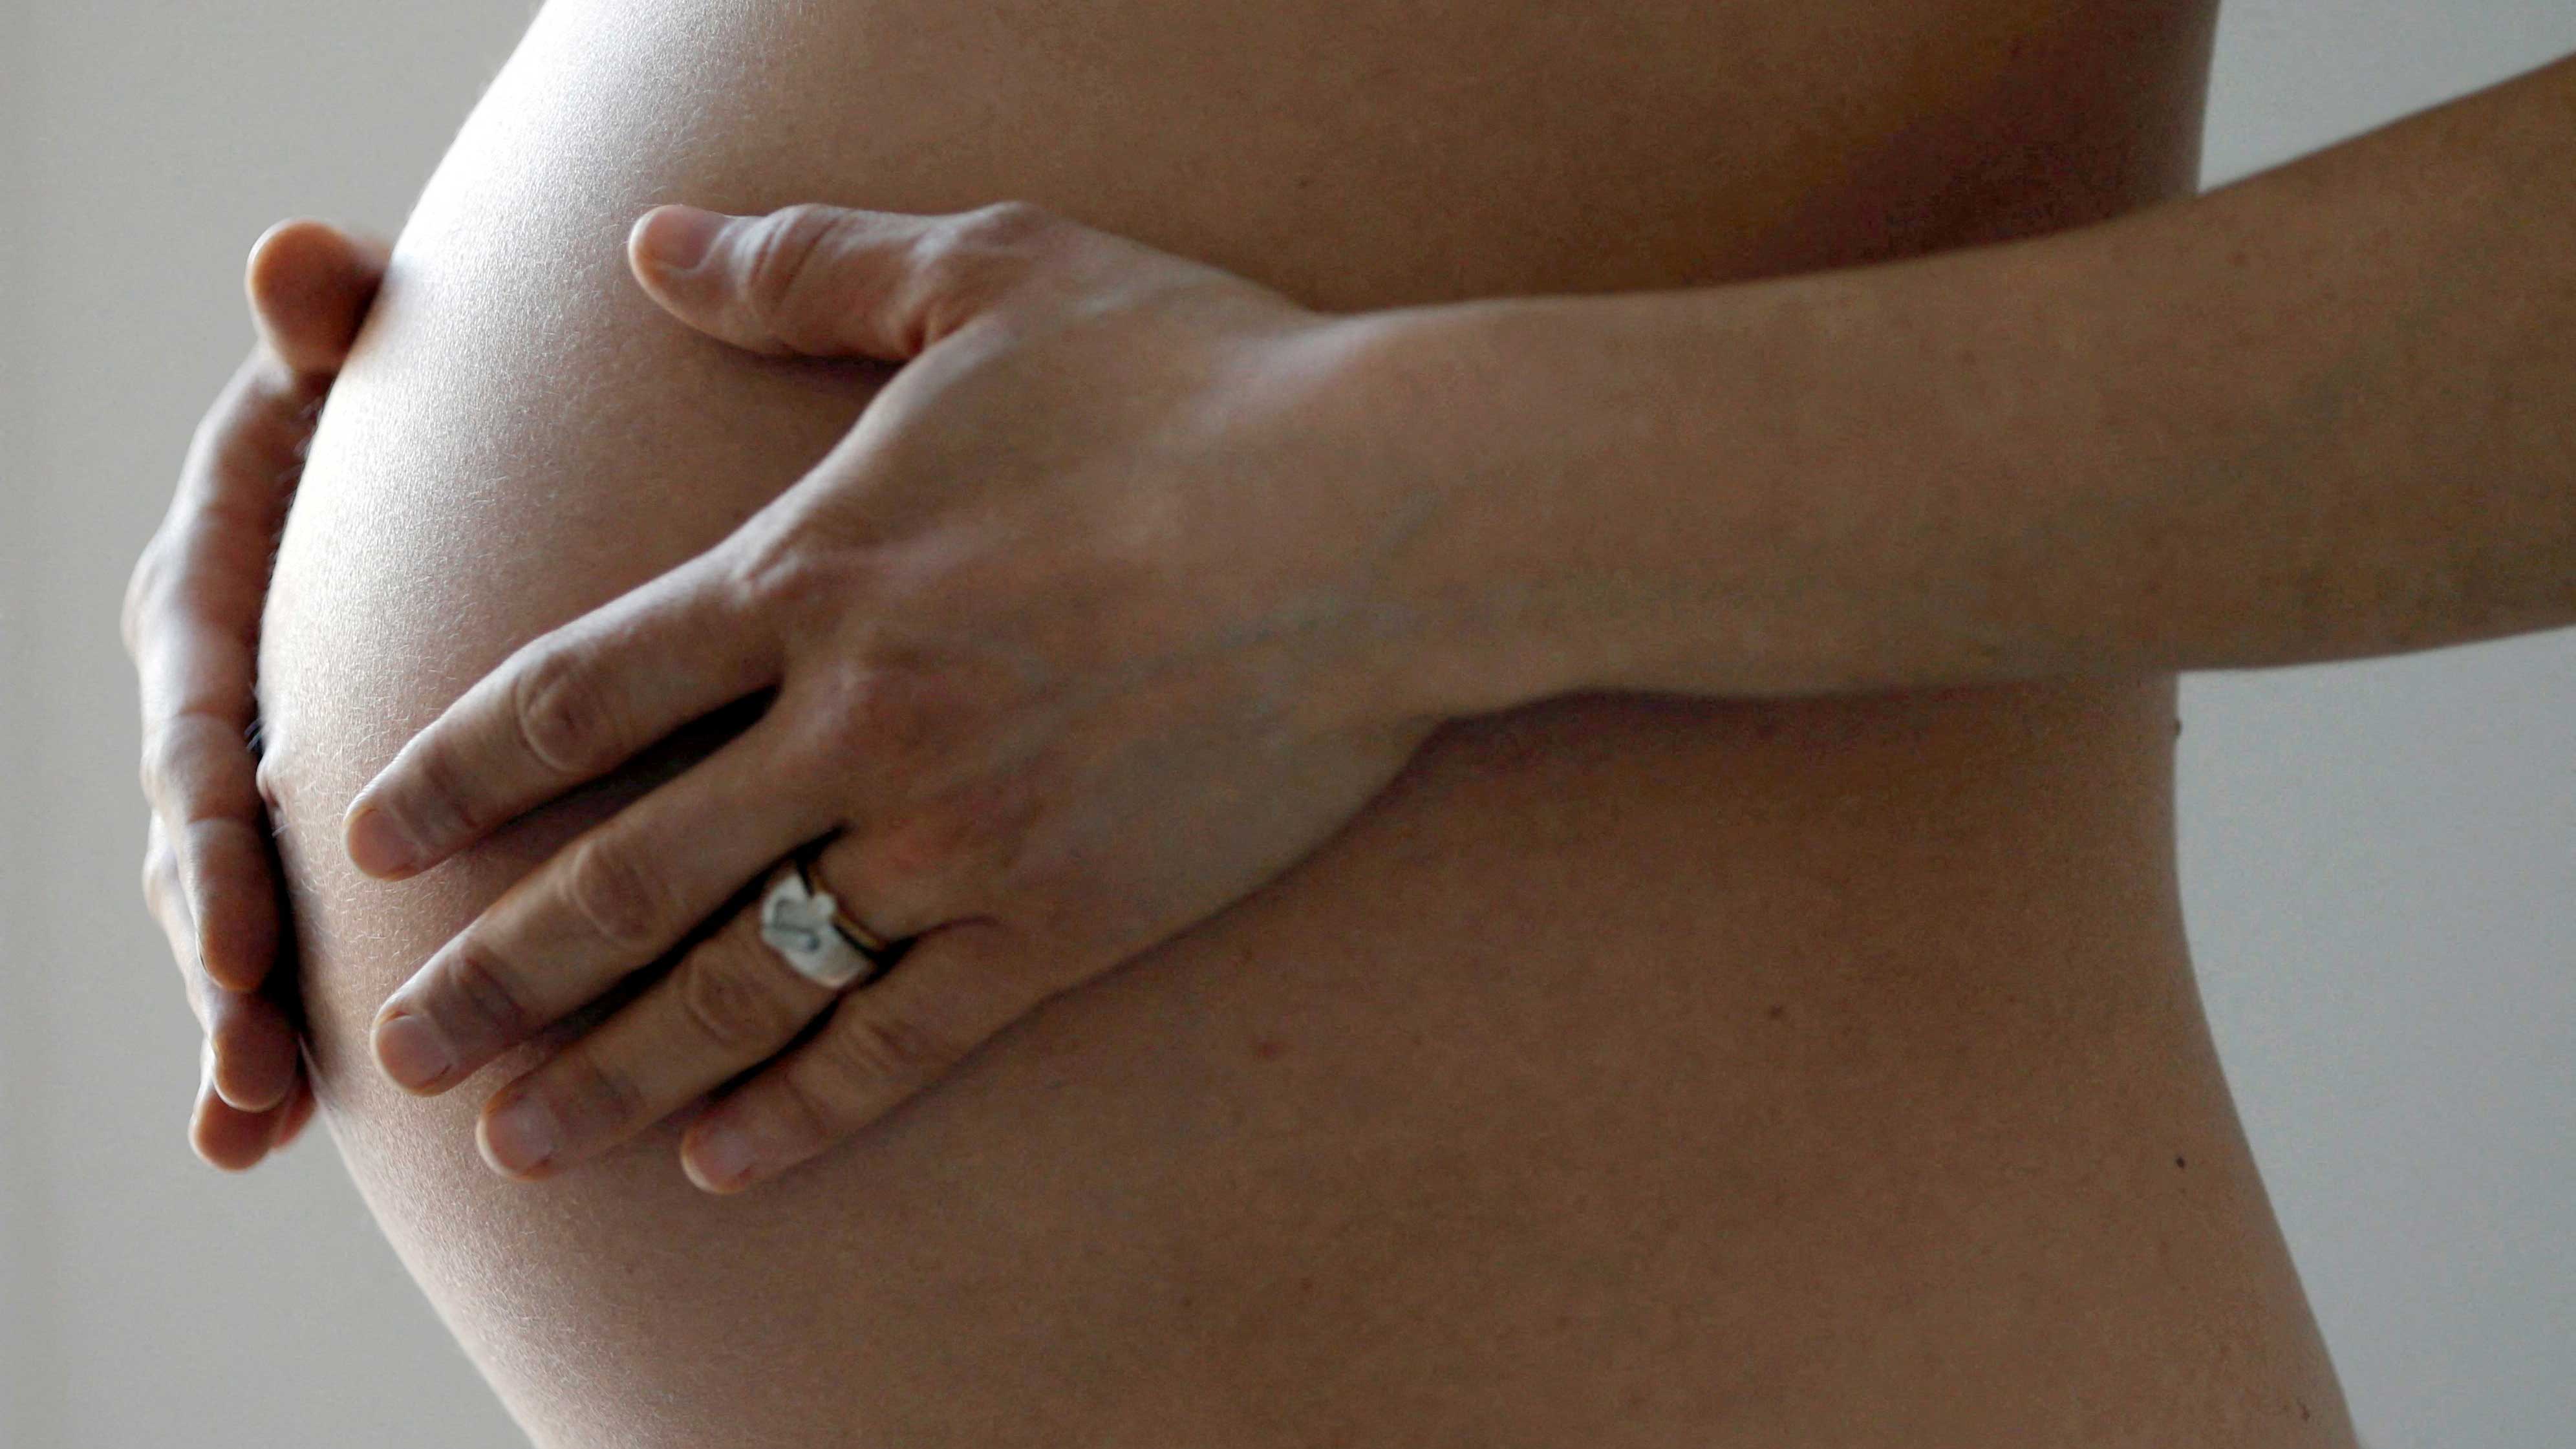 Uterus transplants allow successful pregnancies in US women, study says